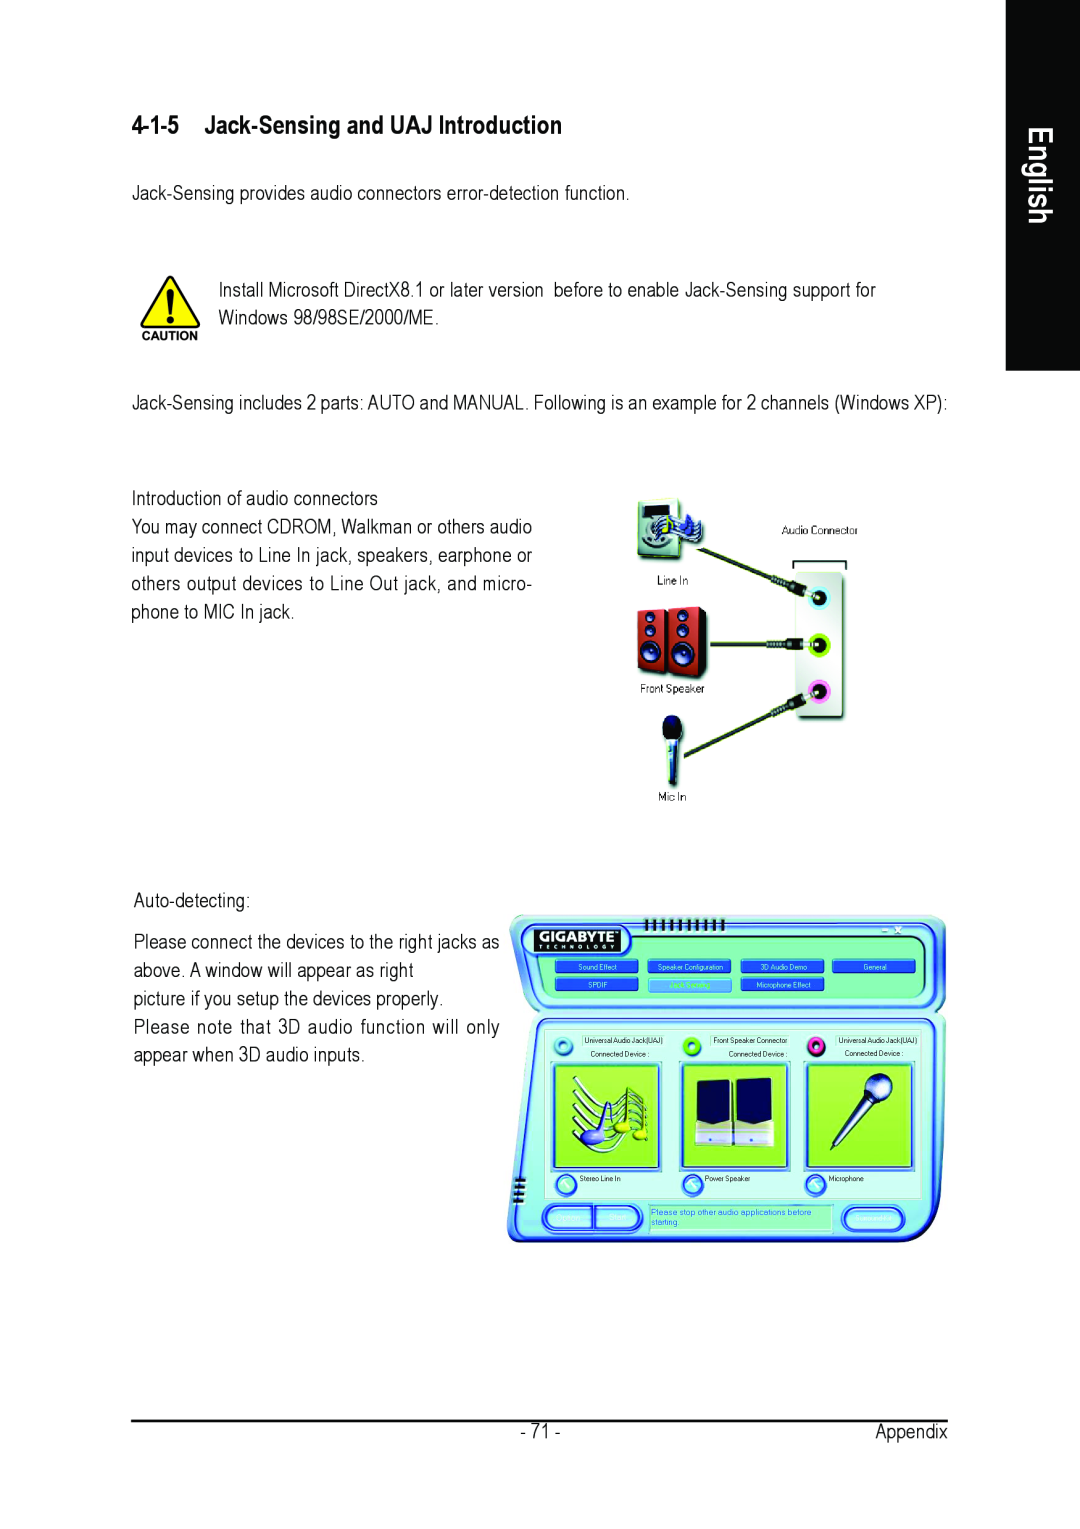 Gigabyte GA-8I915P DUO Jack-Sensing and UAJ Introduction, English, Introduction of audio connectors, Auto-detecting 